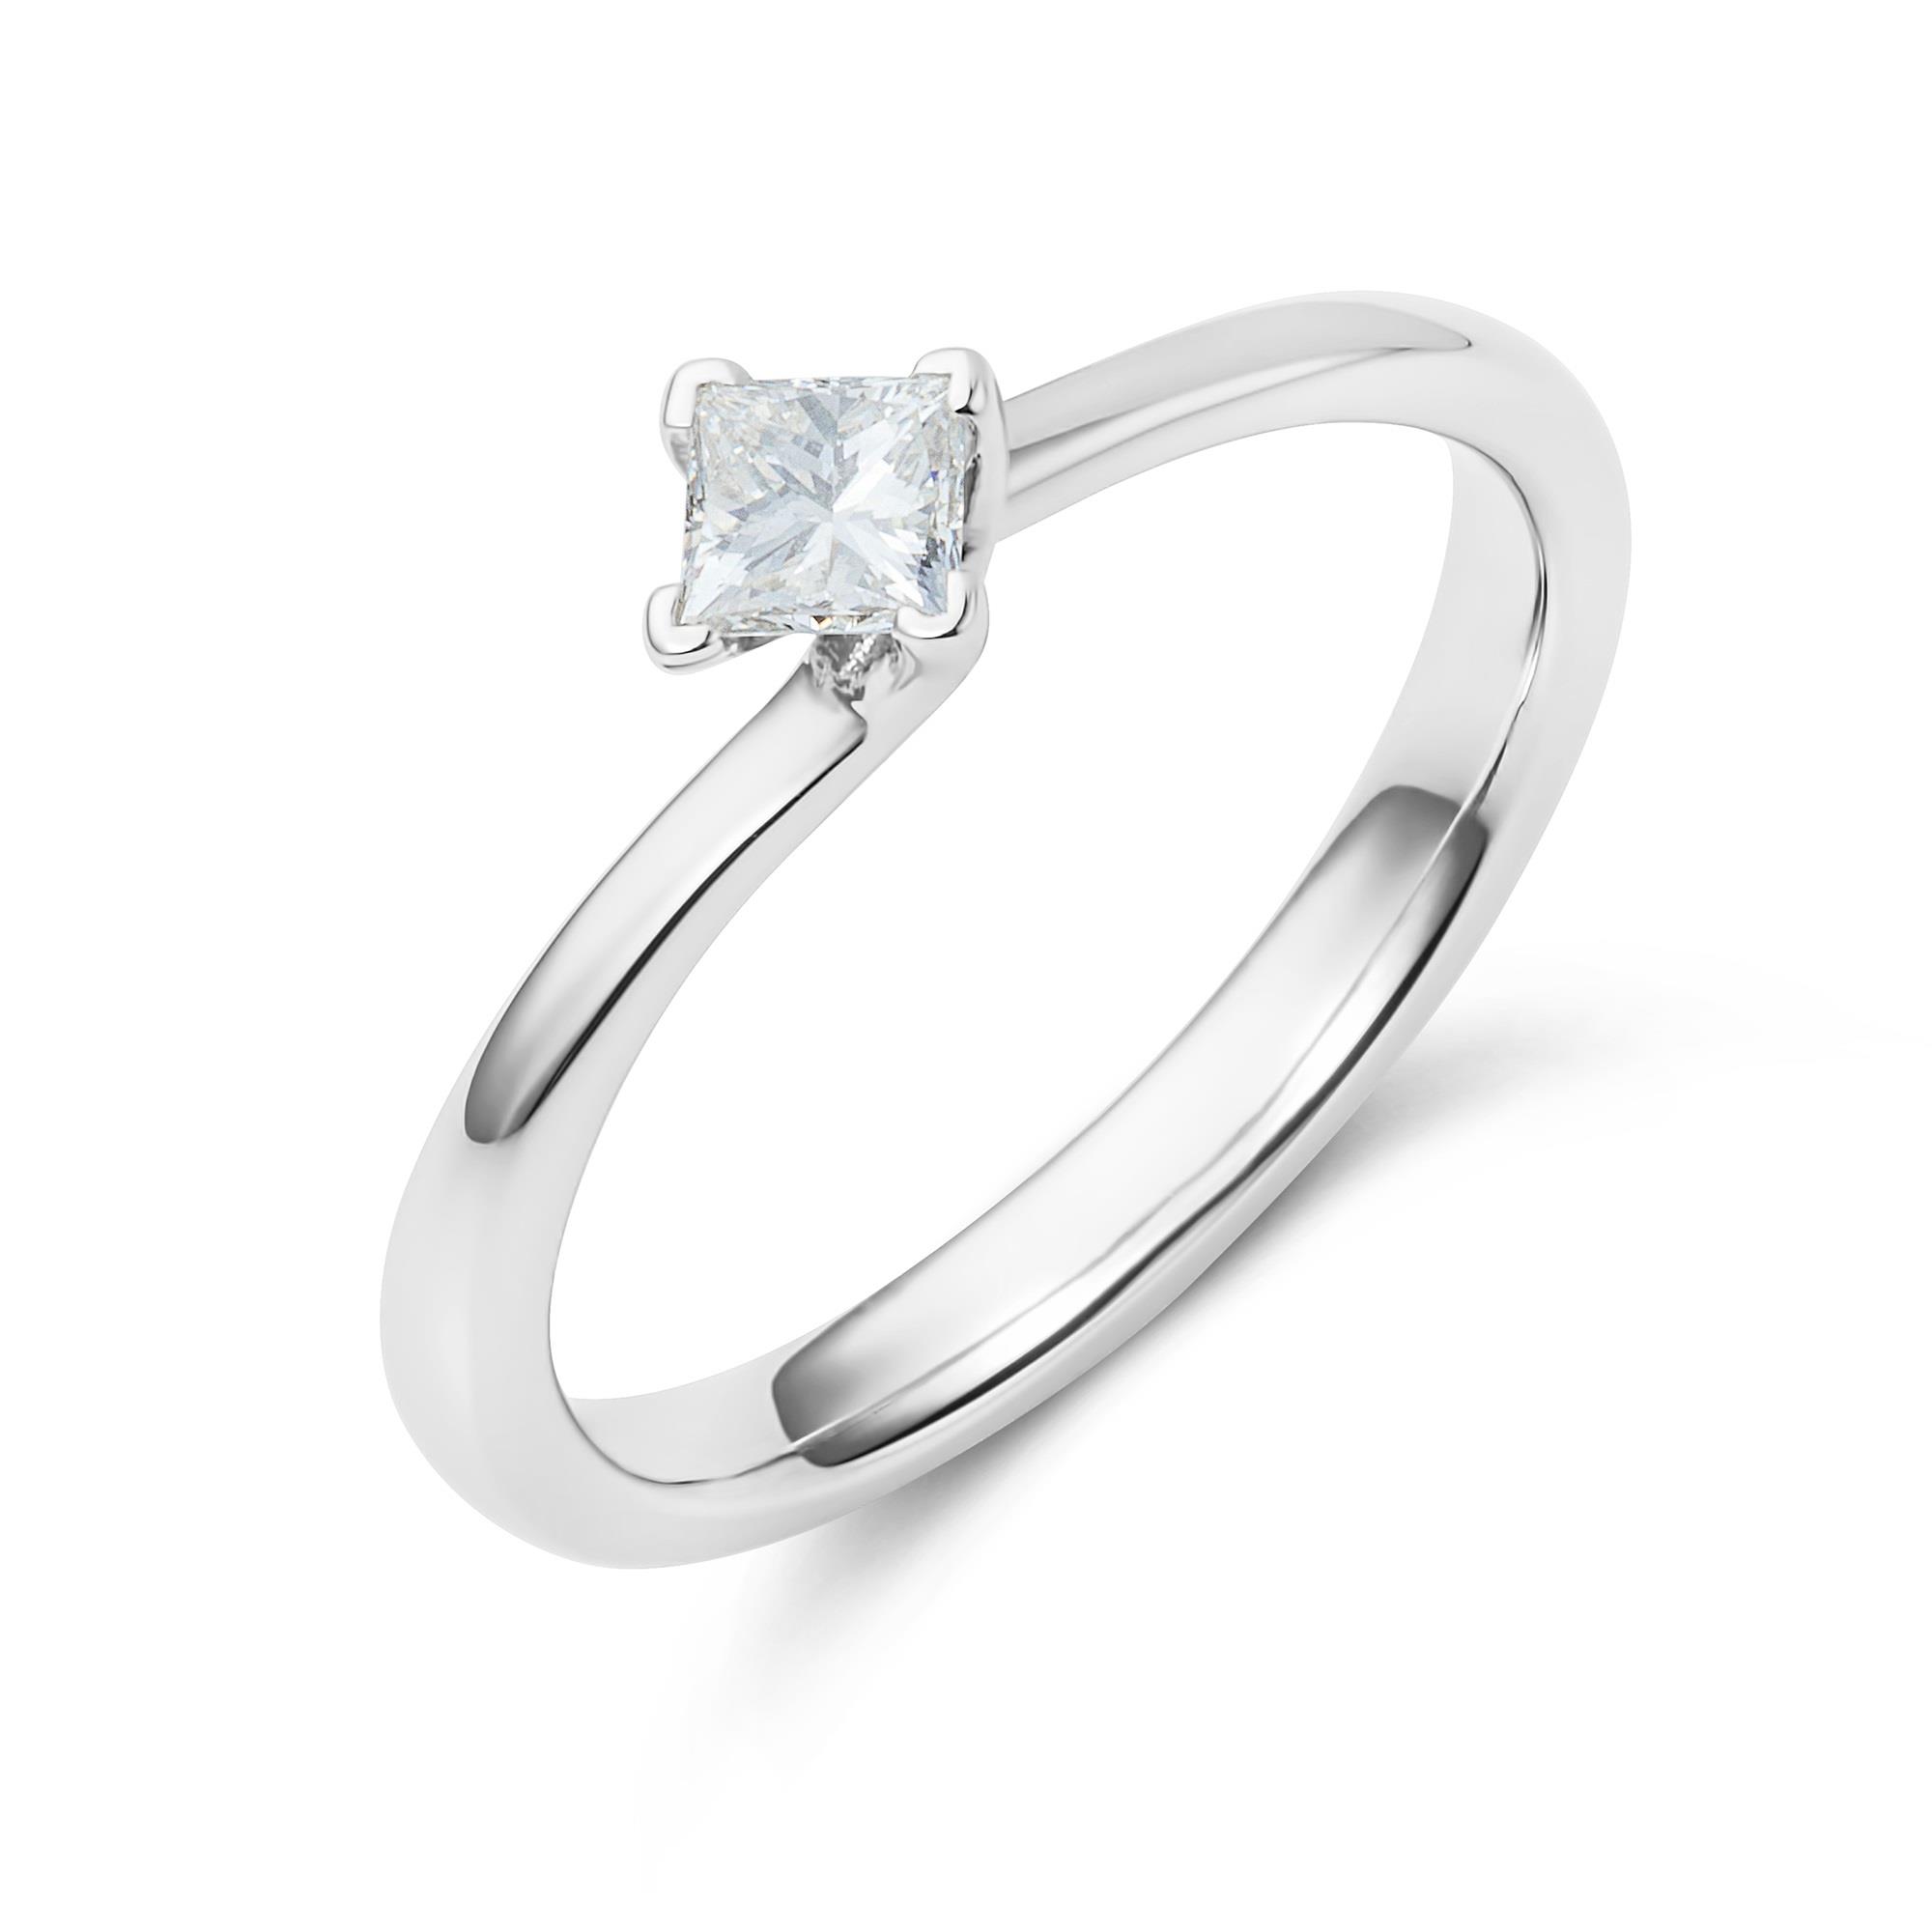 Twist Design Princess Cut Diamond Solitaire Ring 0.25ct | Pravins